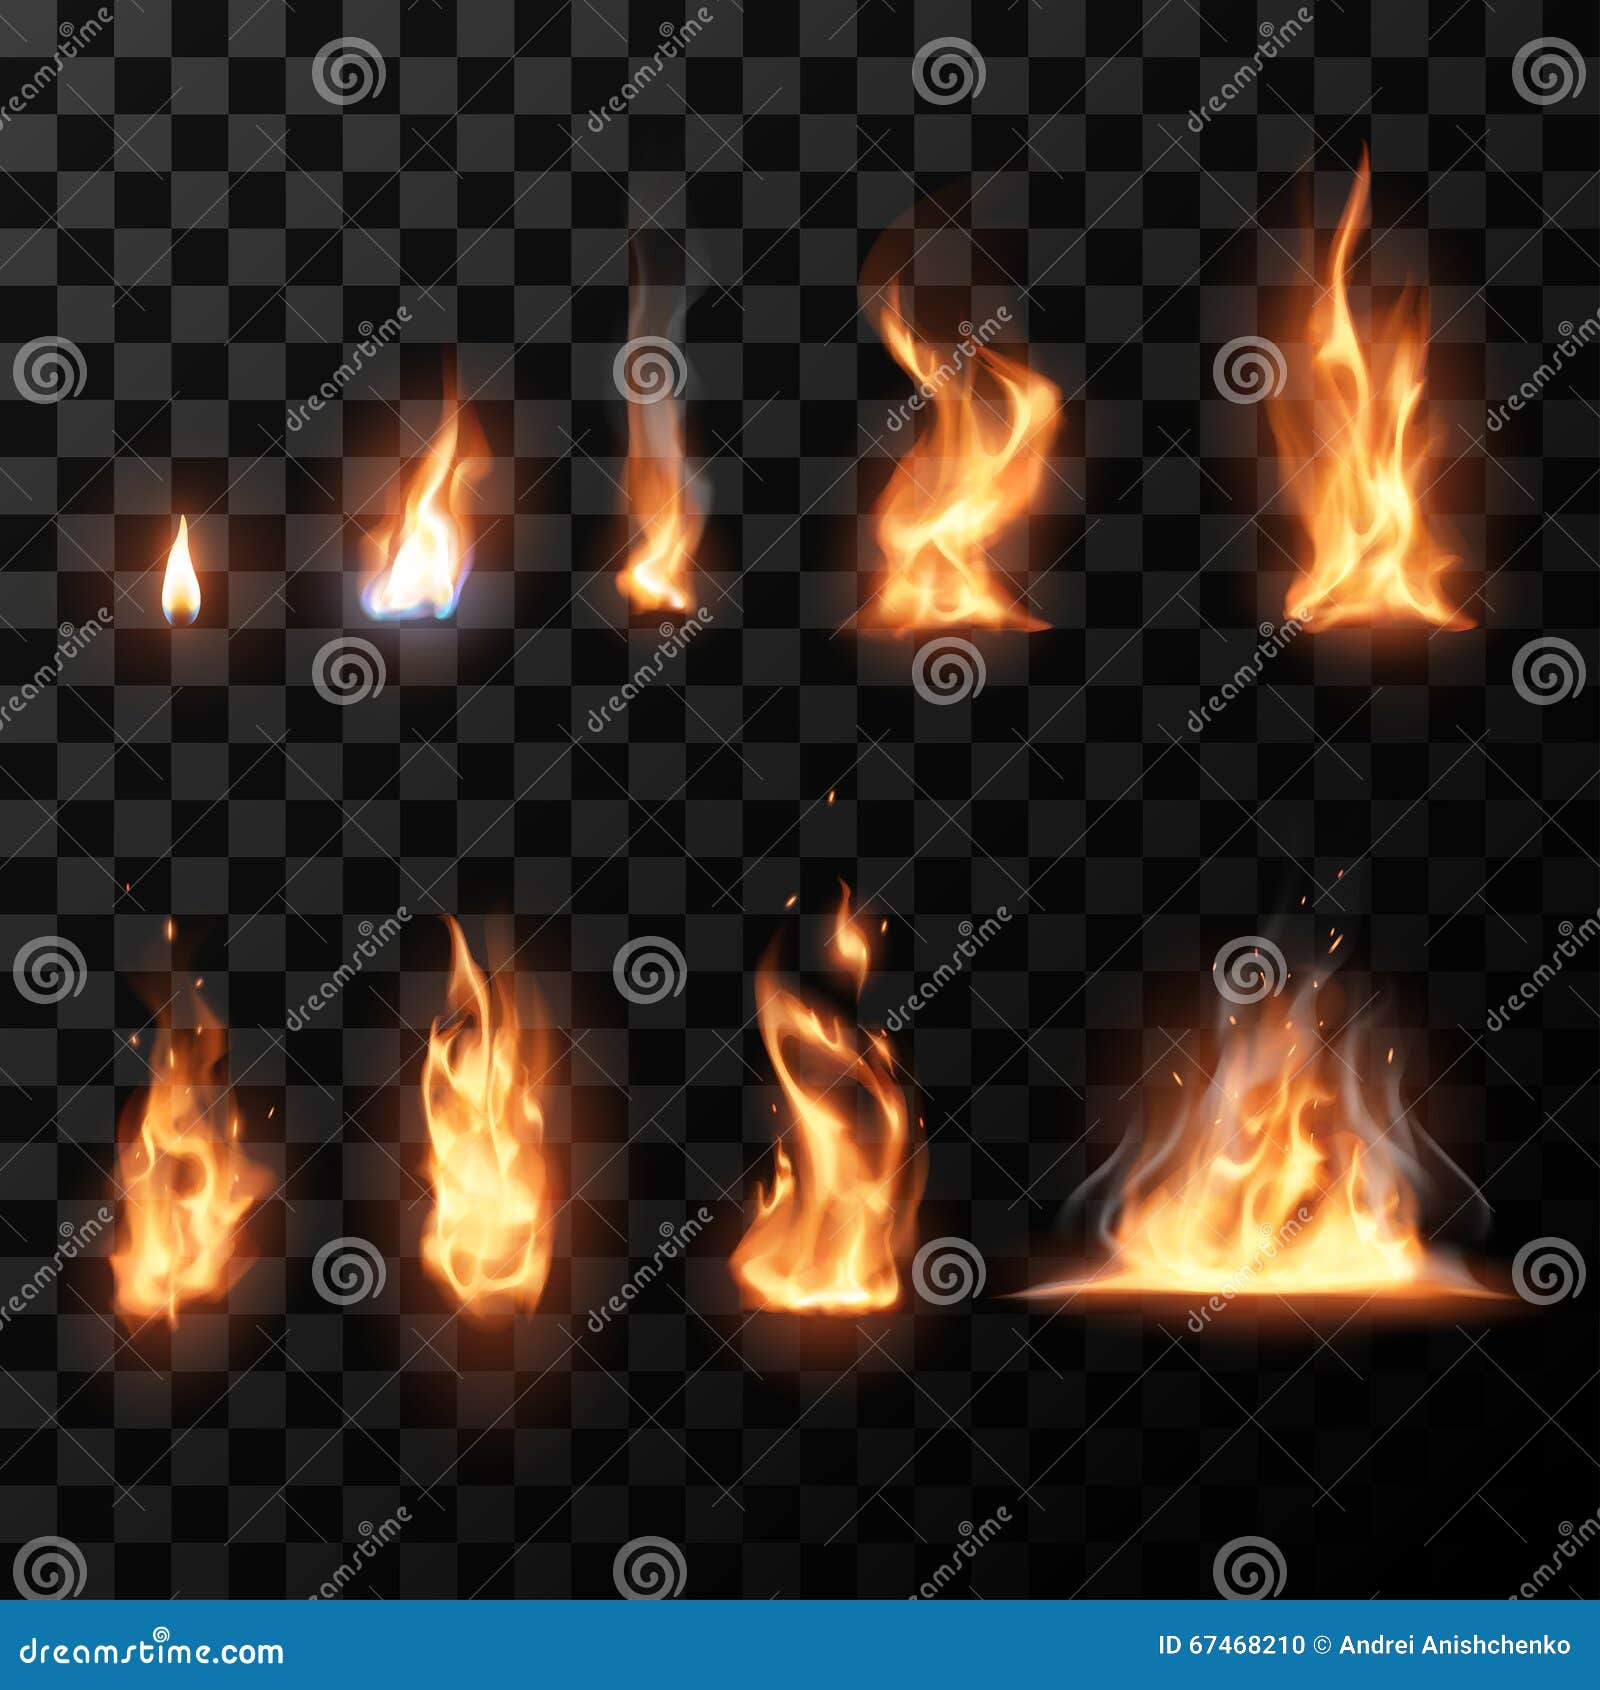 realistic fire flames set